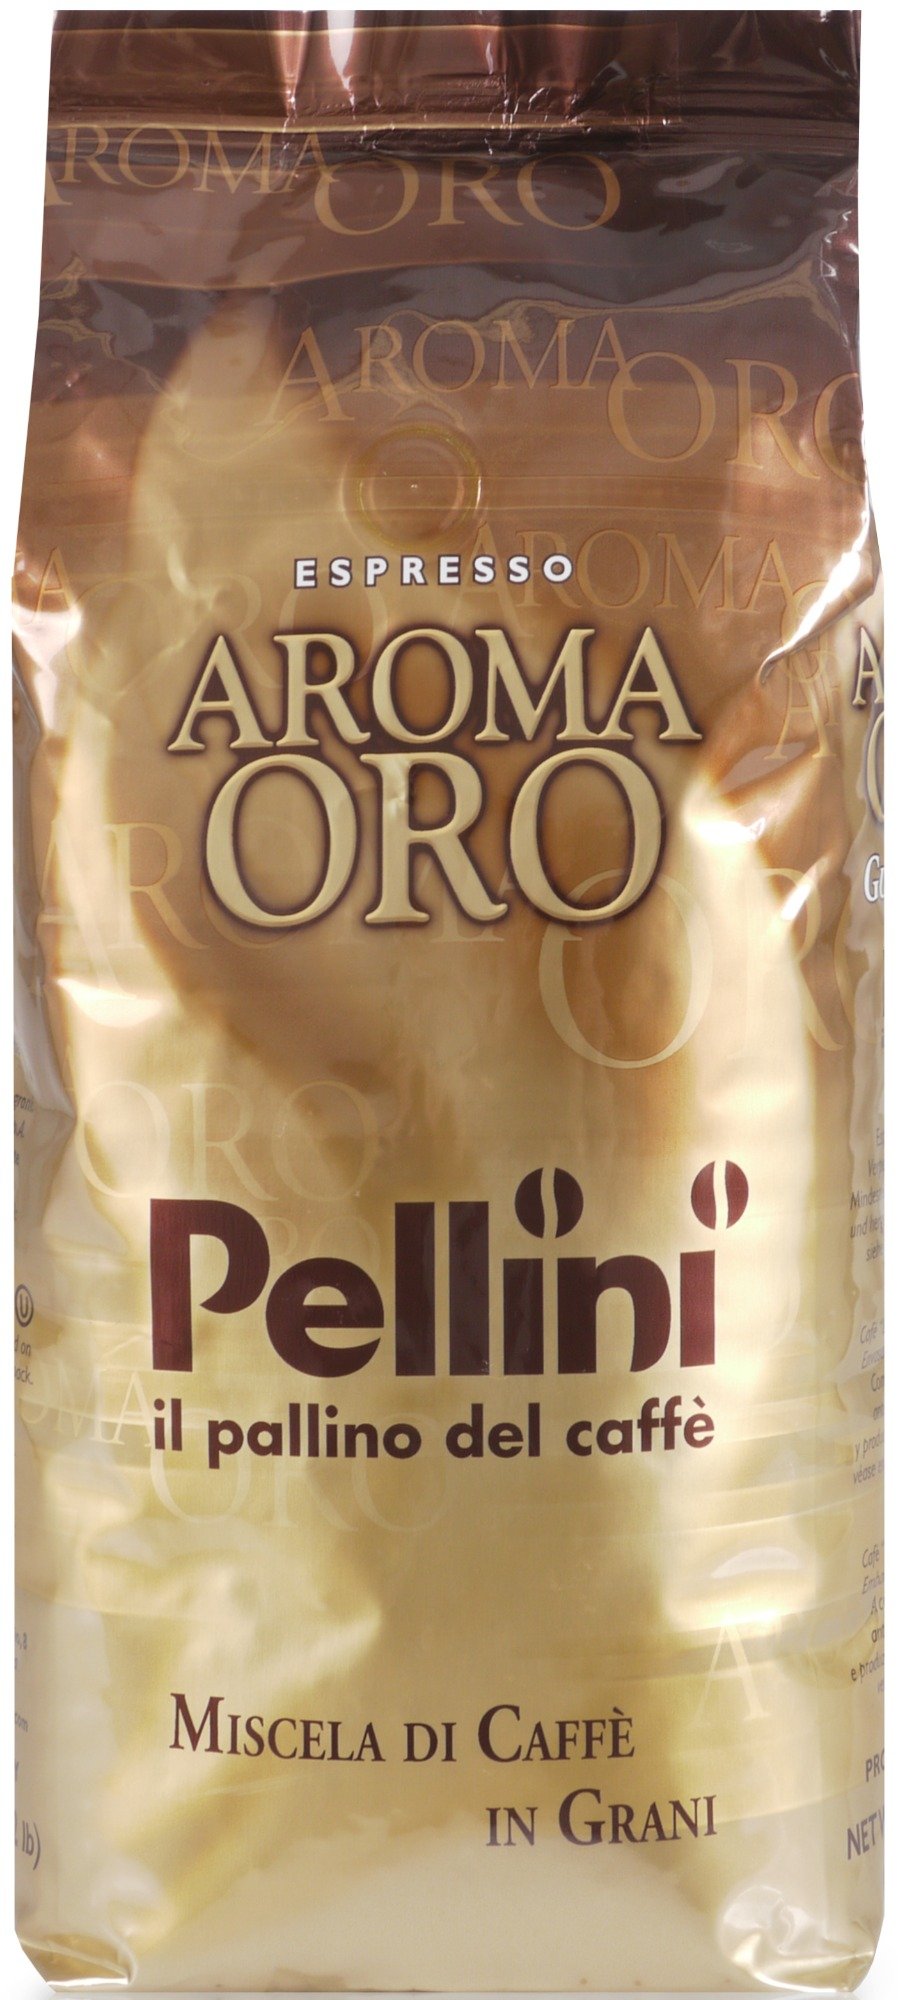 Plantkunde thermometer groet Pellini Espresso Aroma Oro Gusto Intenso 1 kg Coffee Beans - Crema